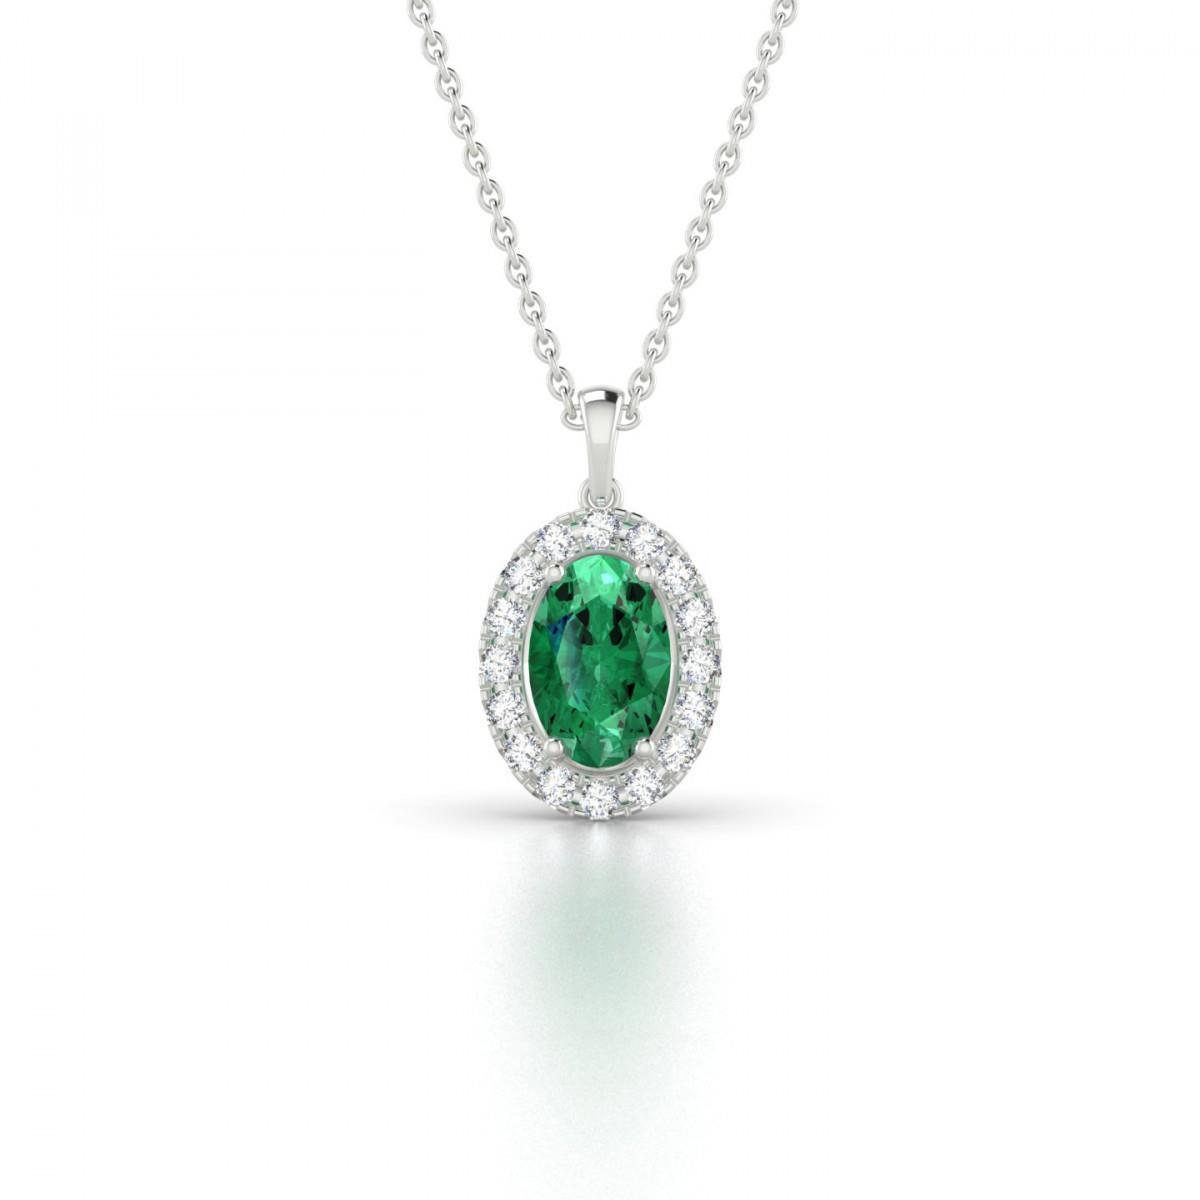 Oval Green Emerald And Diamond Gemstone Pendant Necklace 4.55 Carat